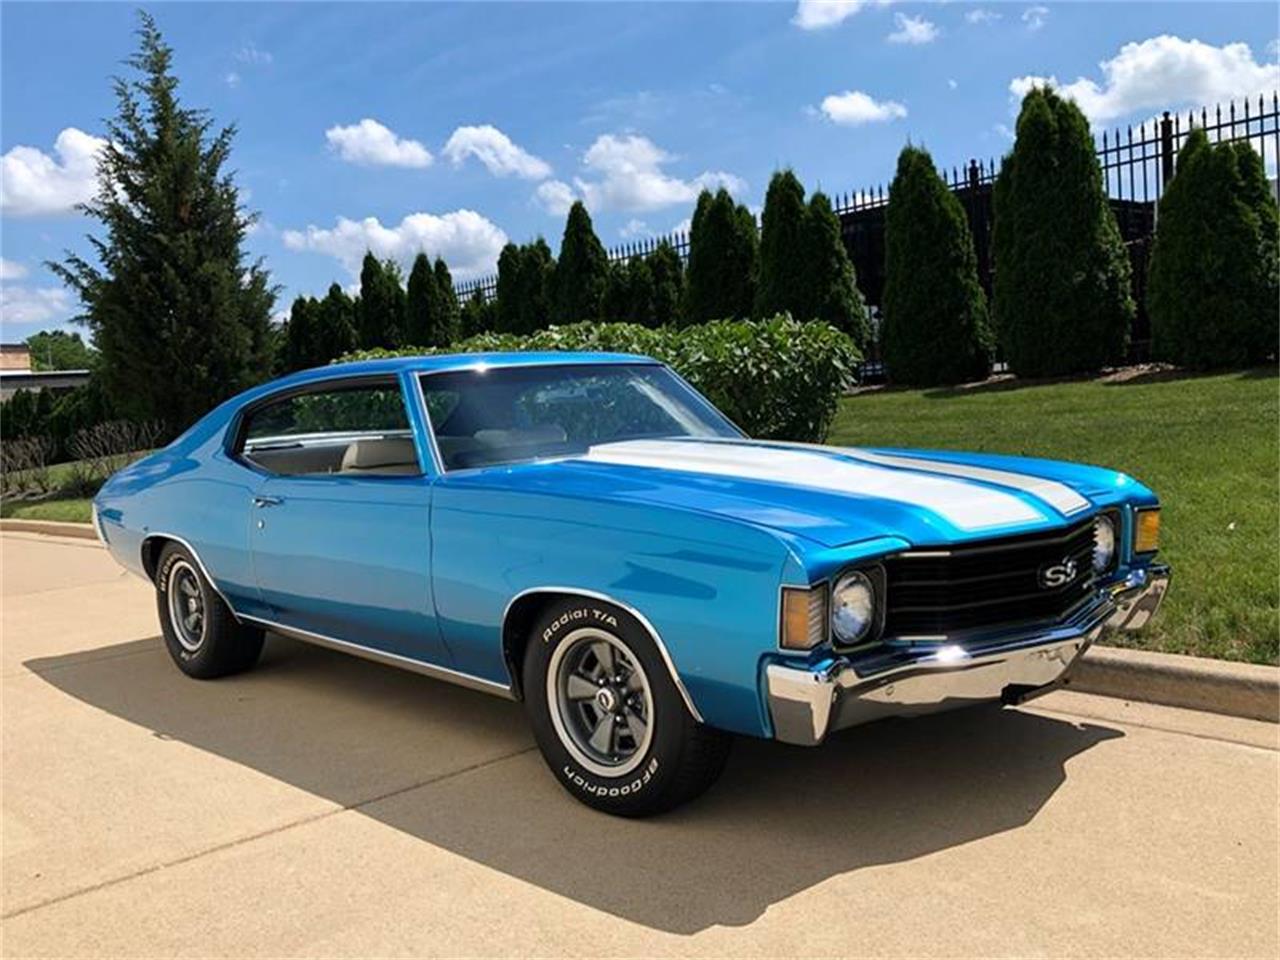 For Sale: 1972 Chevrolet Chevelle in Burr Ridge, Illinois.